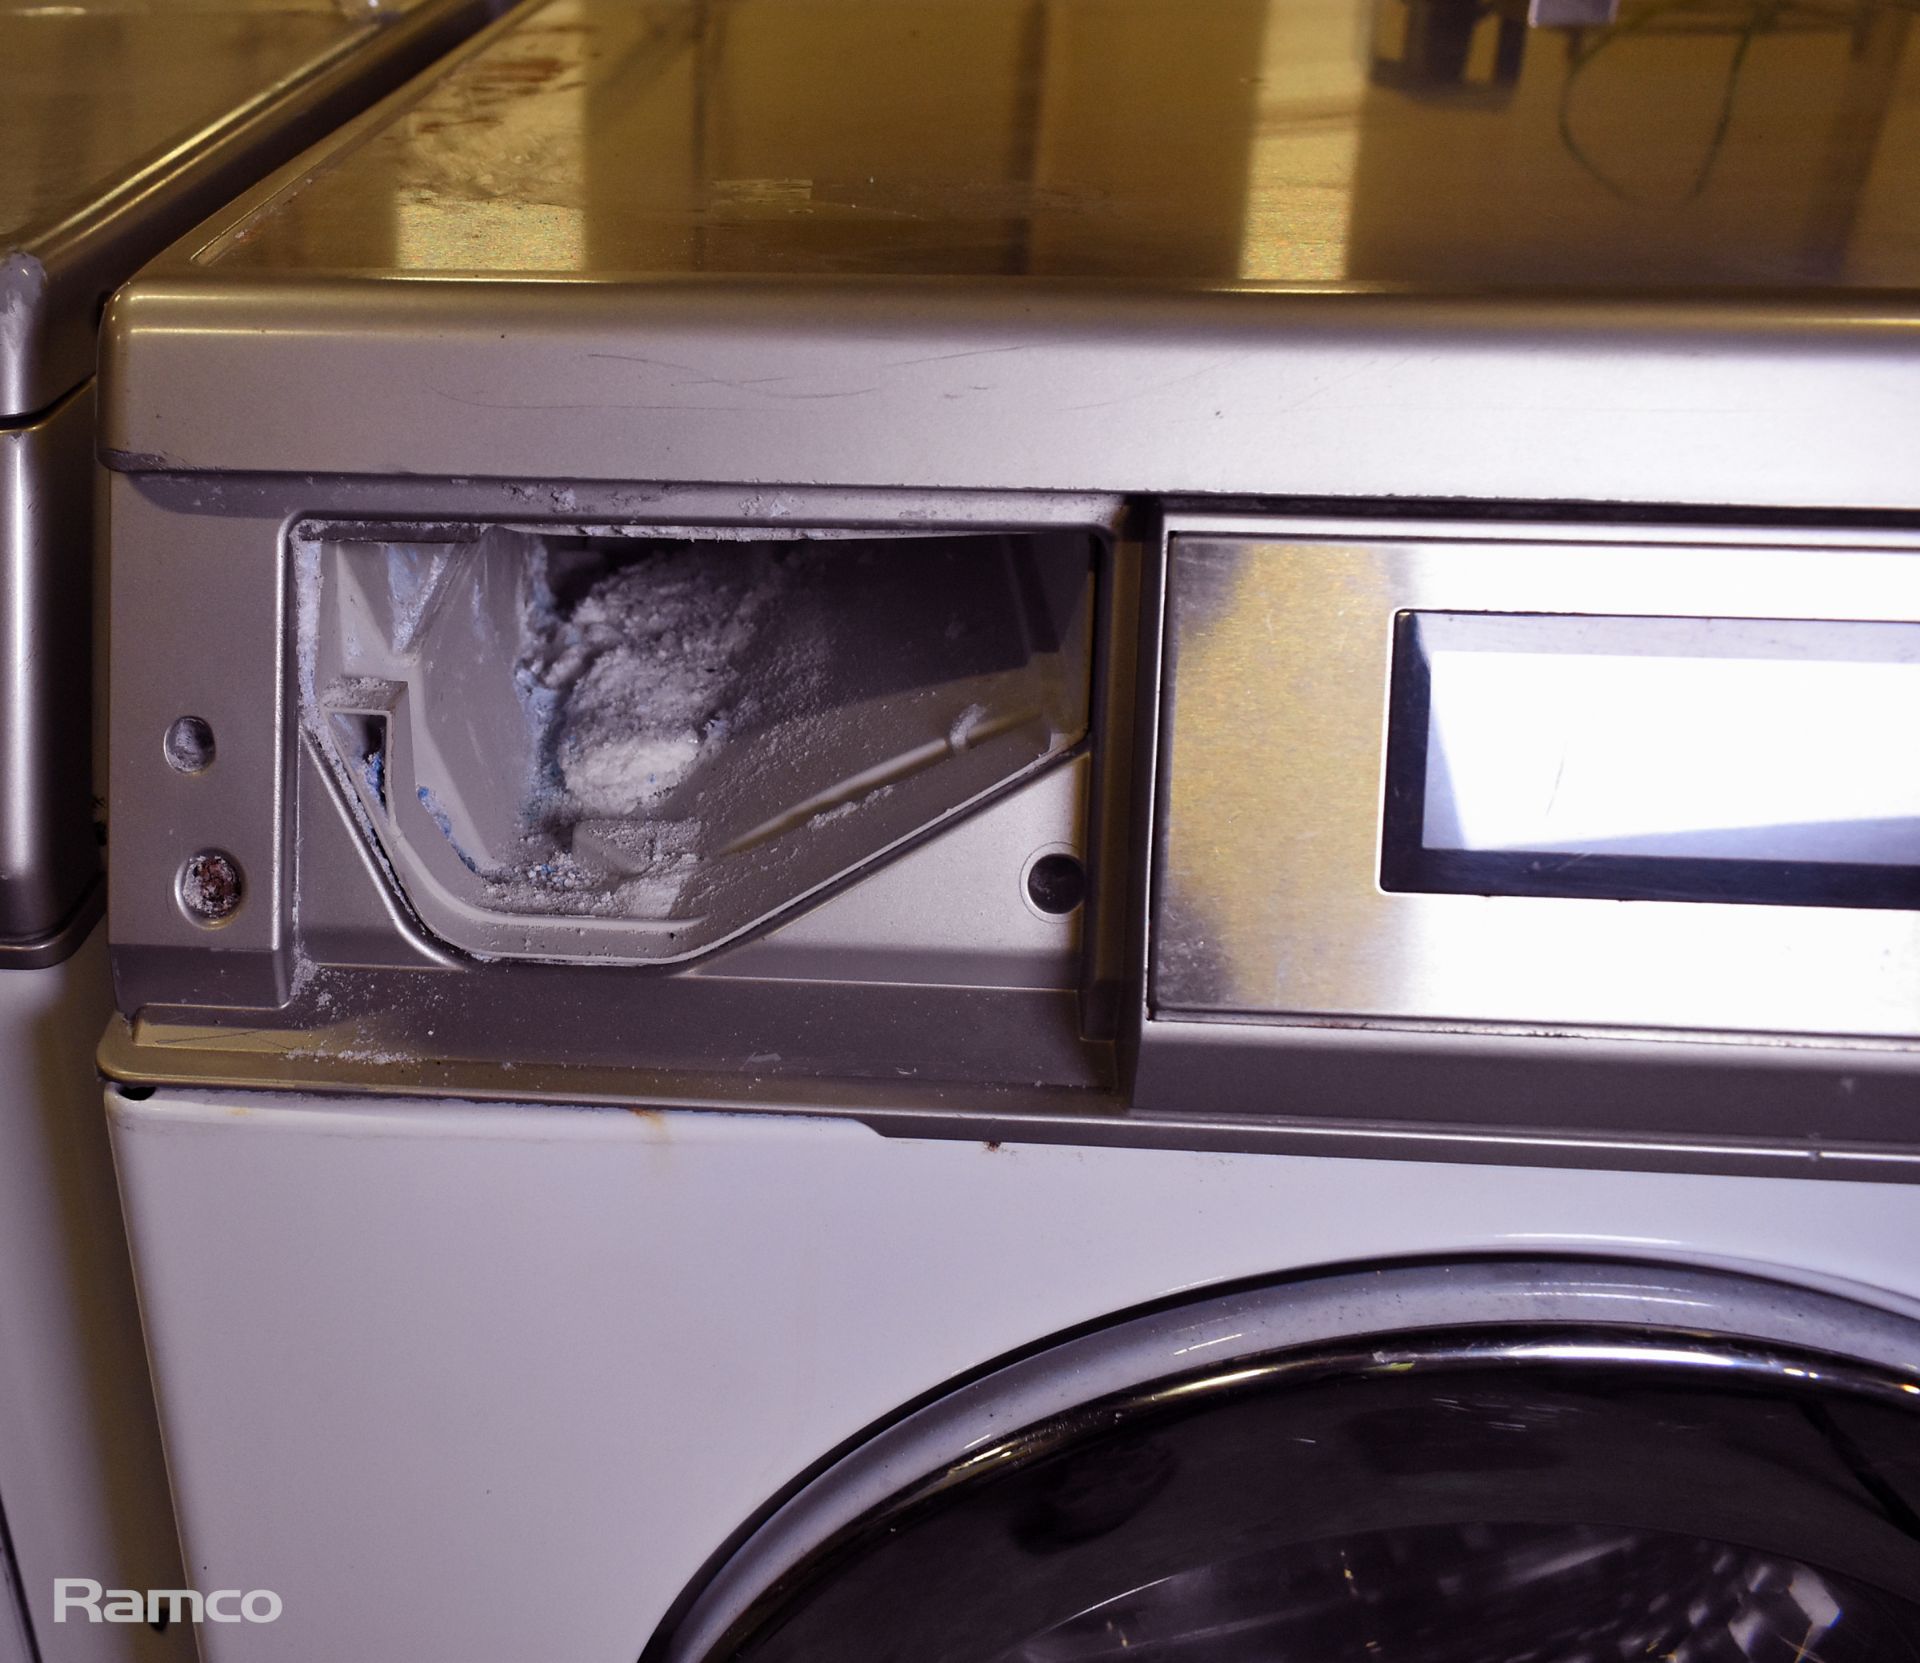 Miele PW 6065 6.5kg washing machine - W 600 x D 730 x H 850mm - MISSING DETERGENT DRAWER - Image 3 of 4